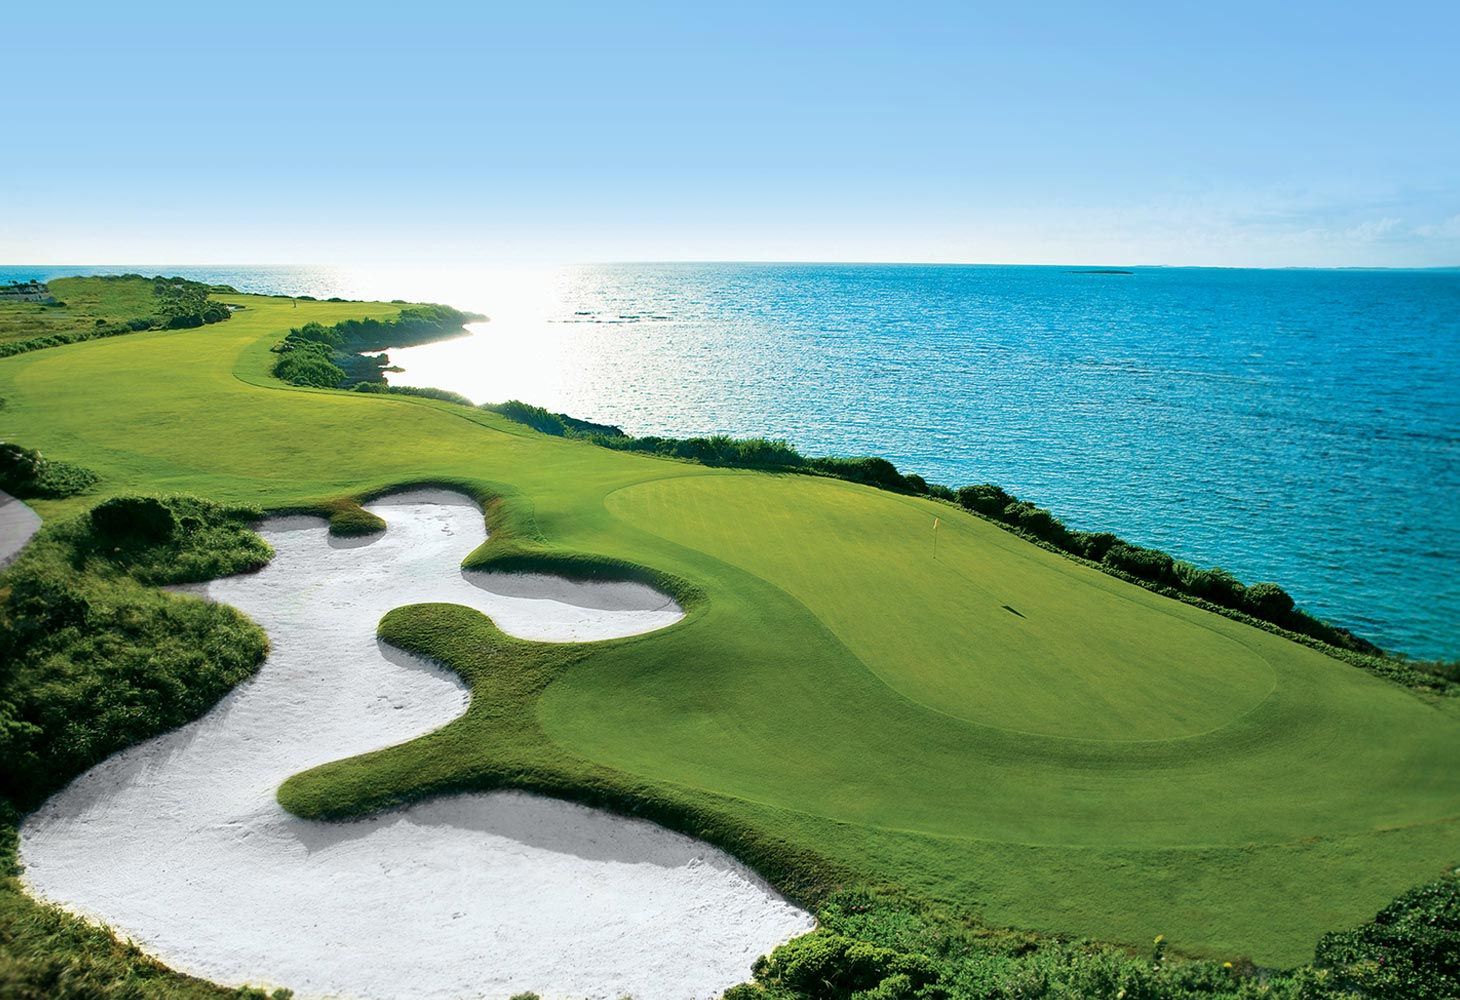 Sandals Emerald Bay Resort Golf Course